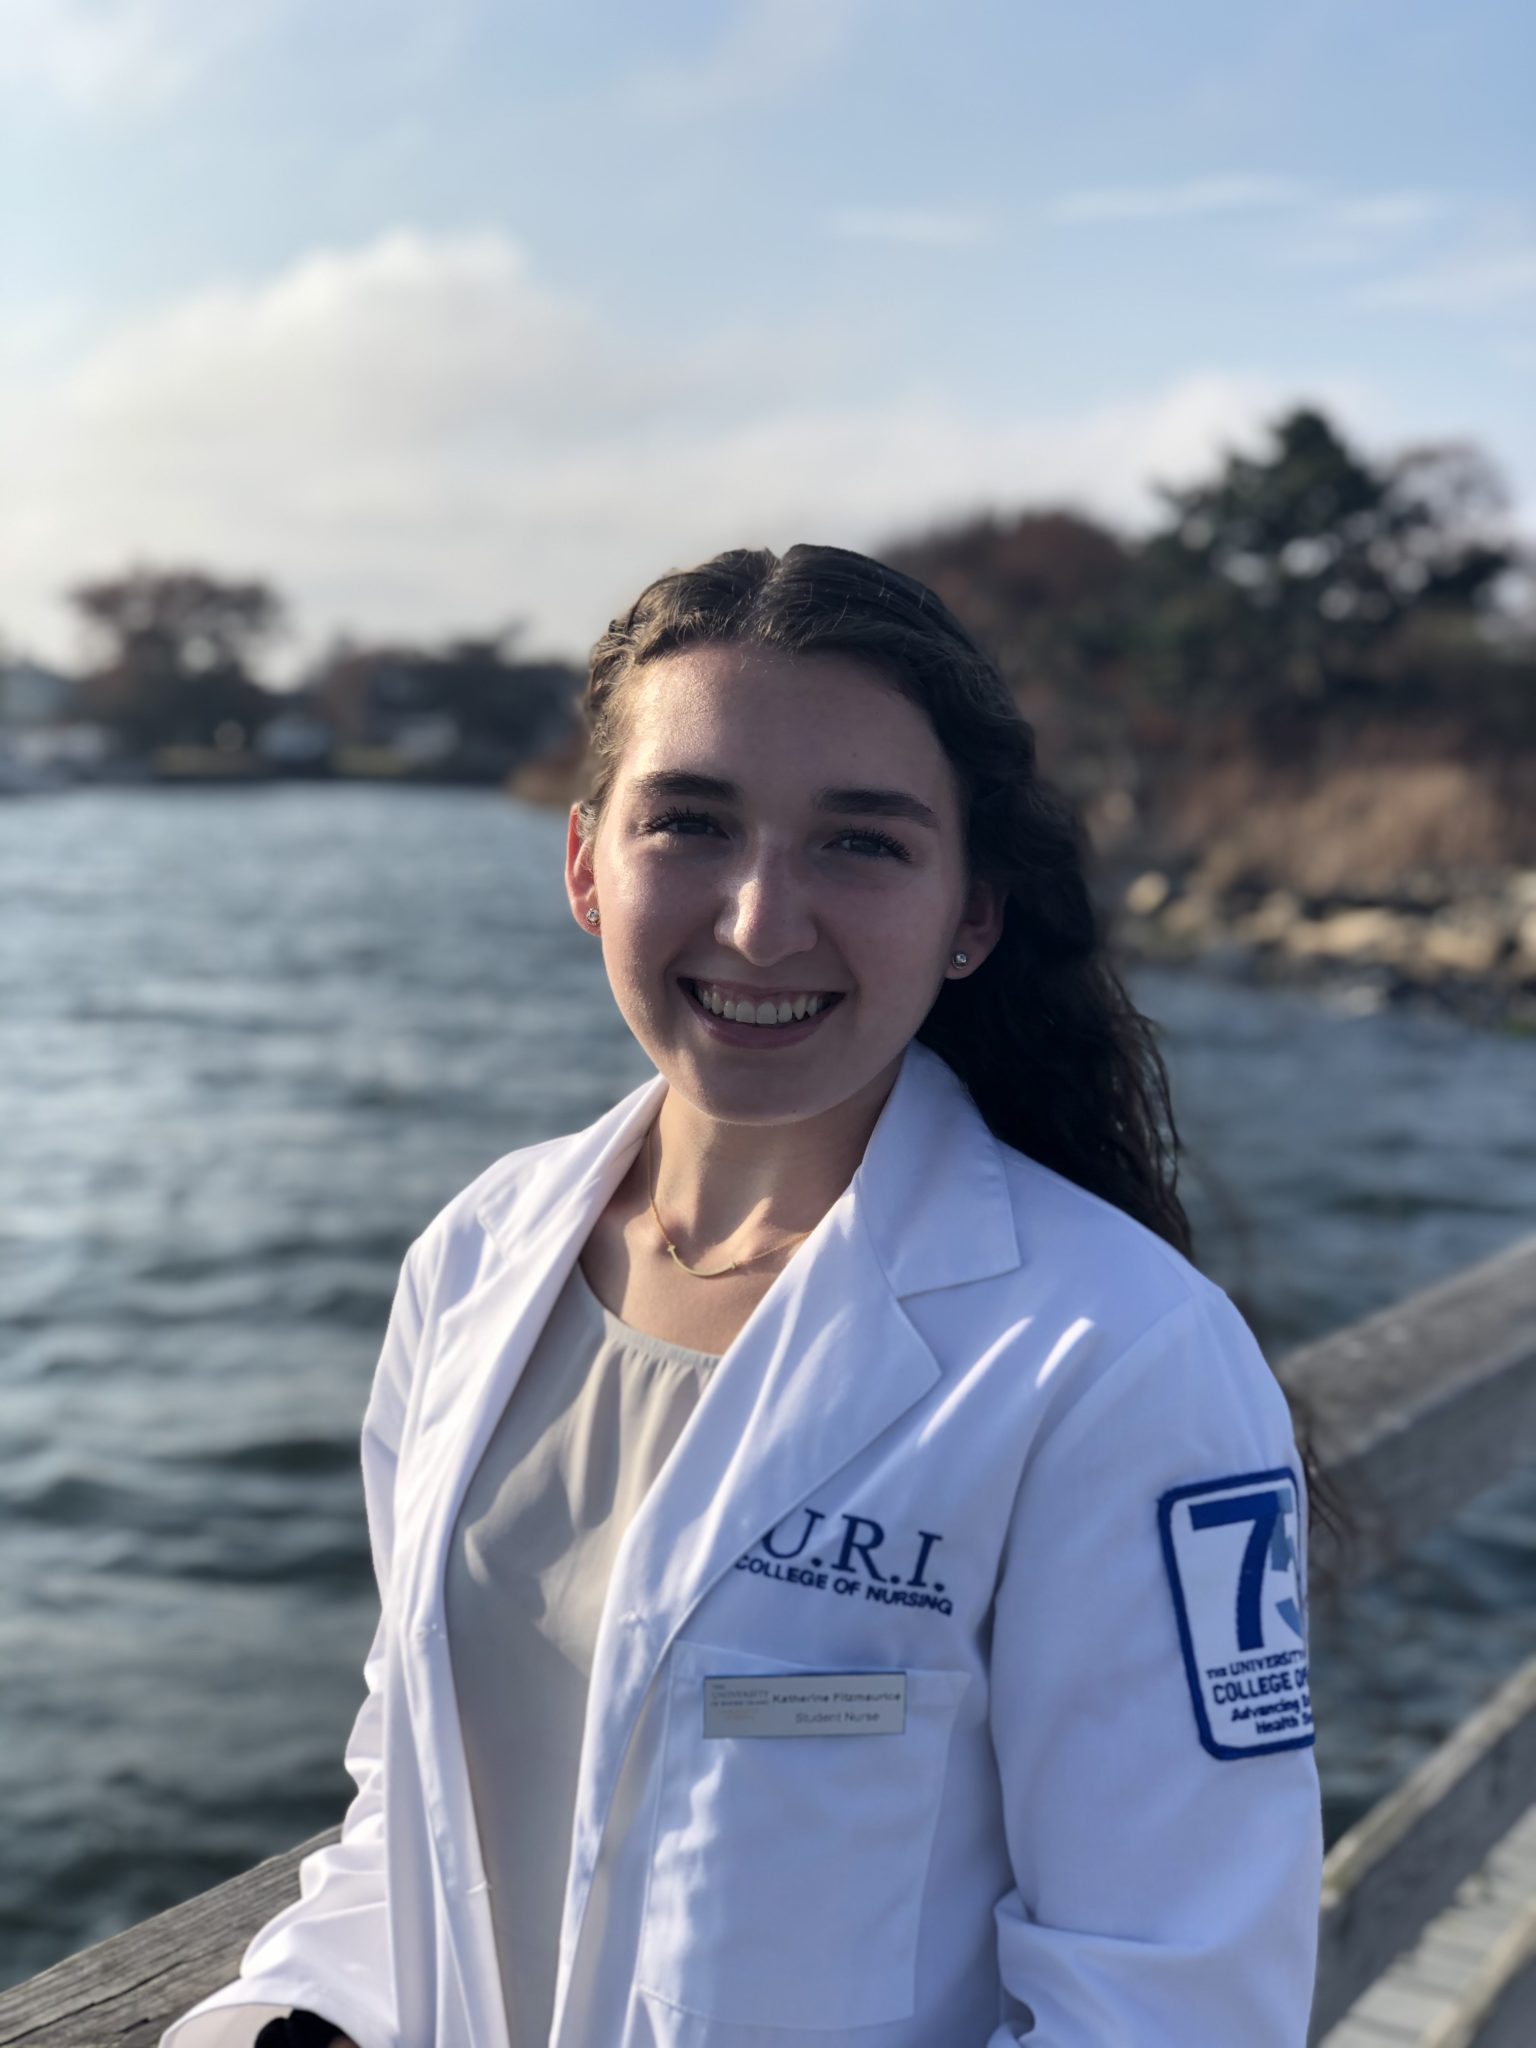 student nurse in scrubs jacket standing in front of an ocean view